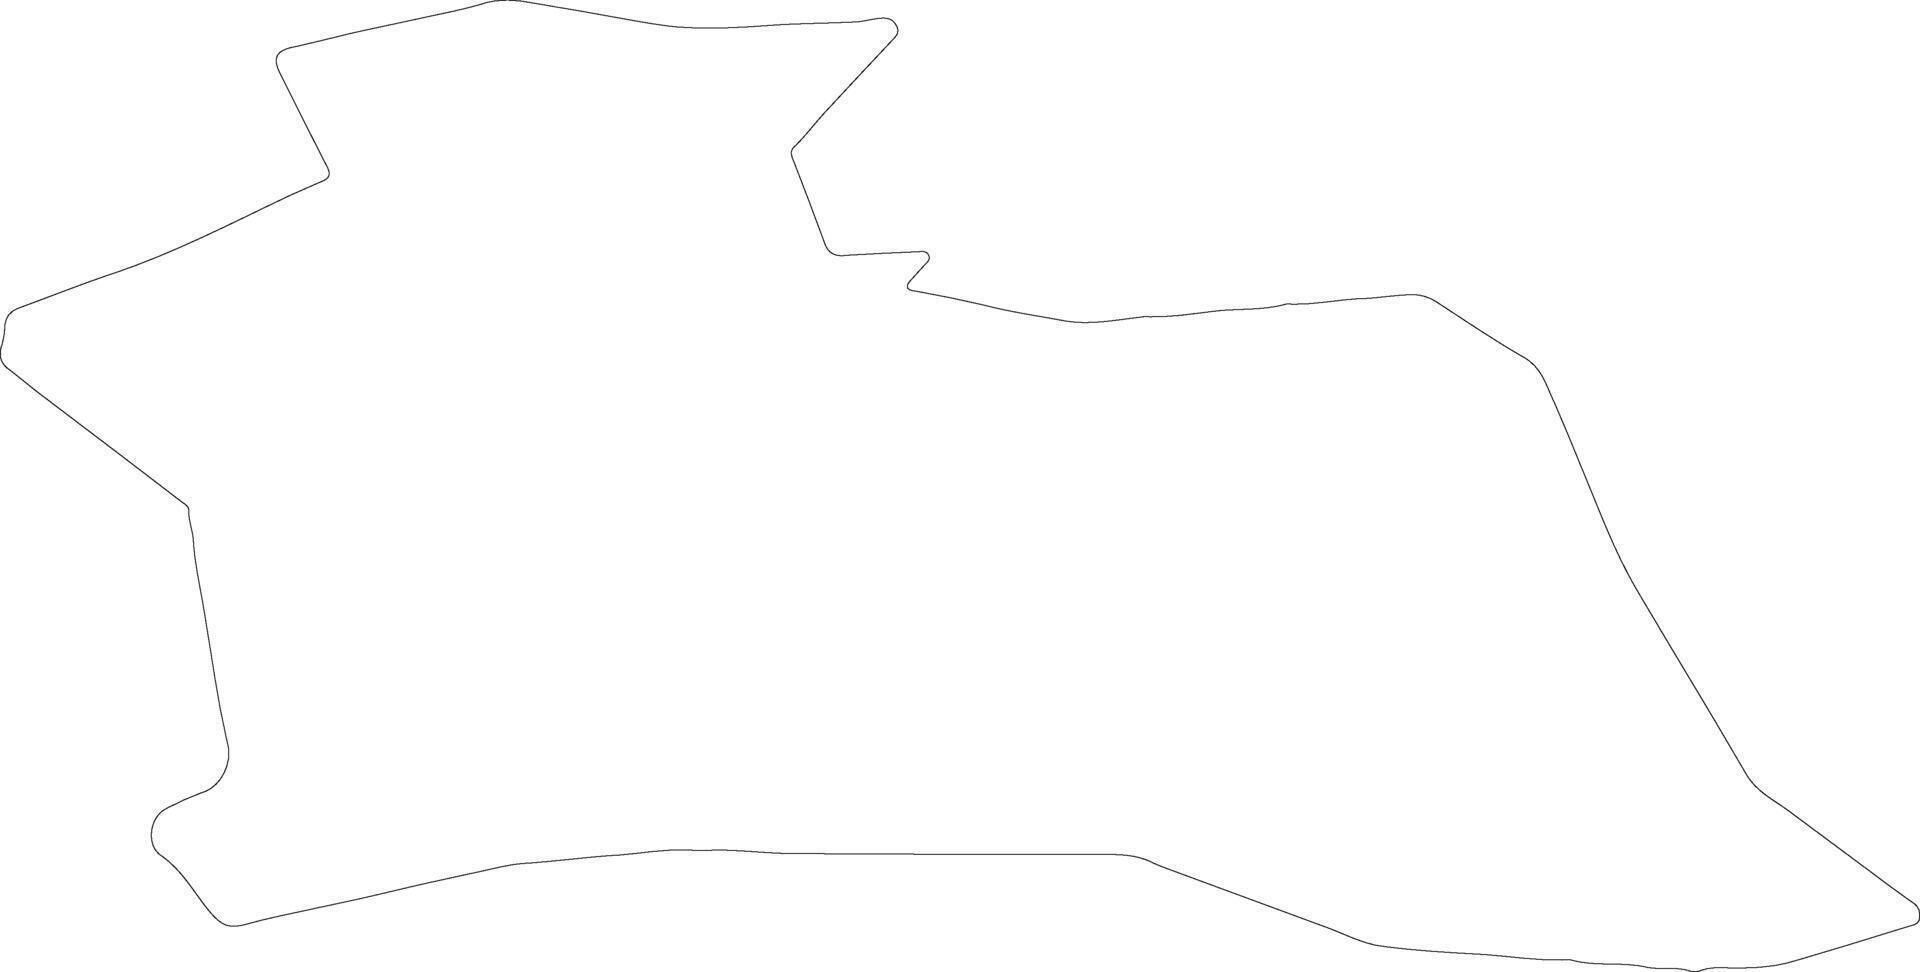 jaunpils Letonia contorno mapa vector